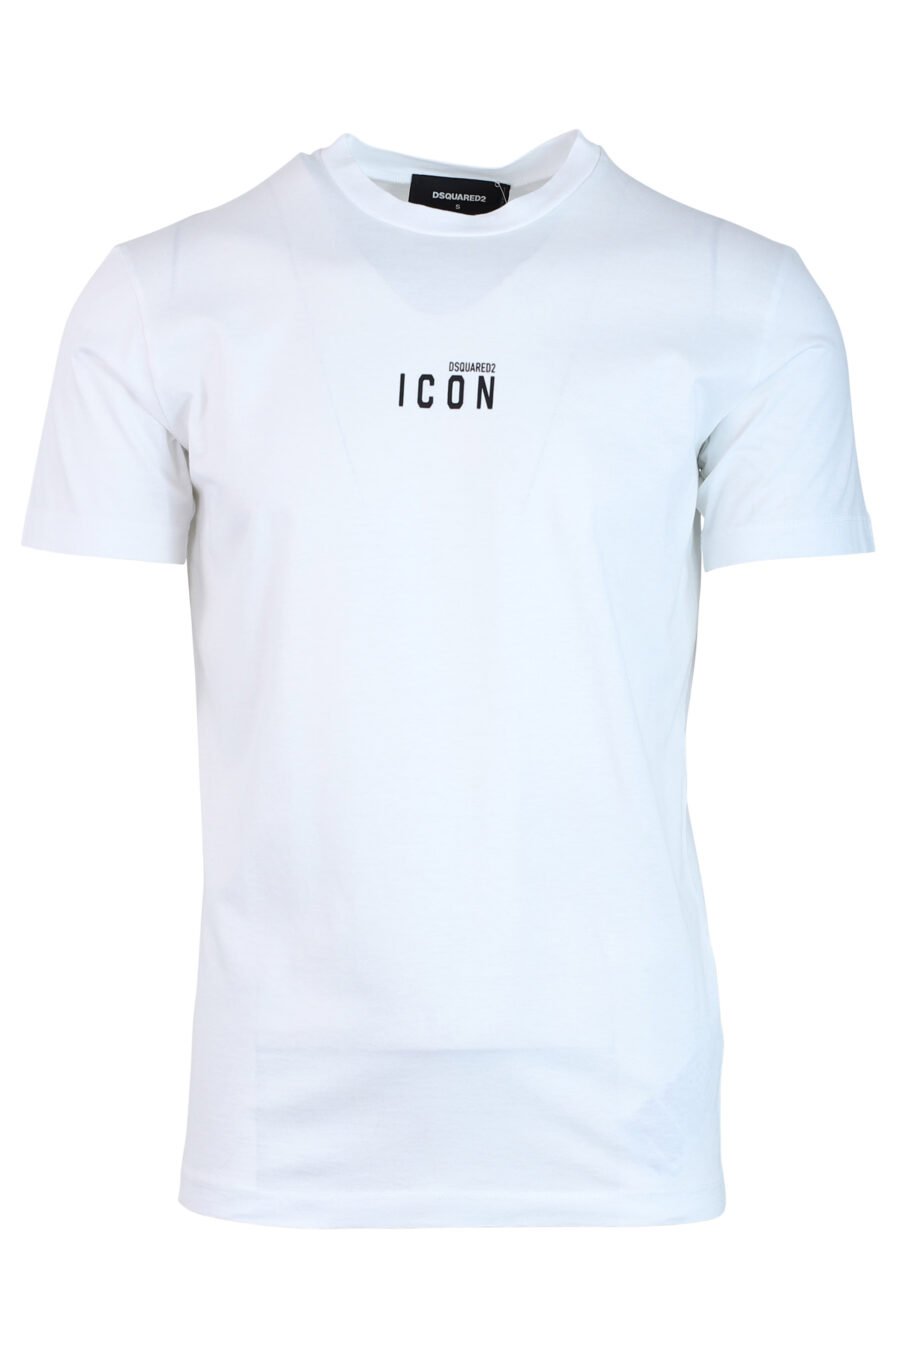 T-shirt blanc avec minilogue "icon" - IMG 0719